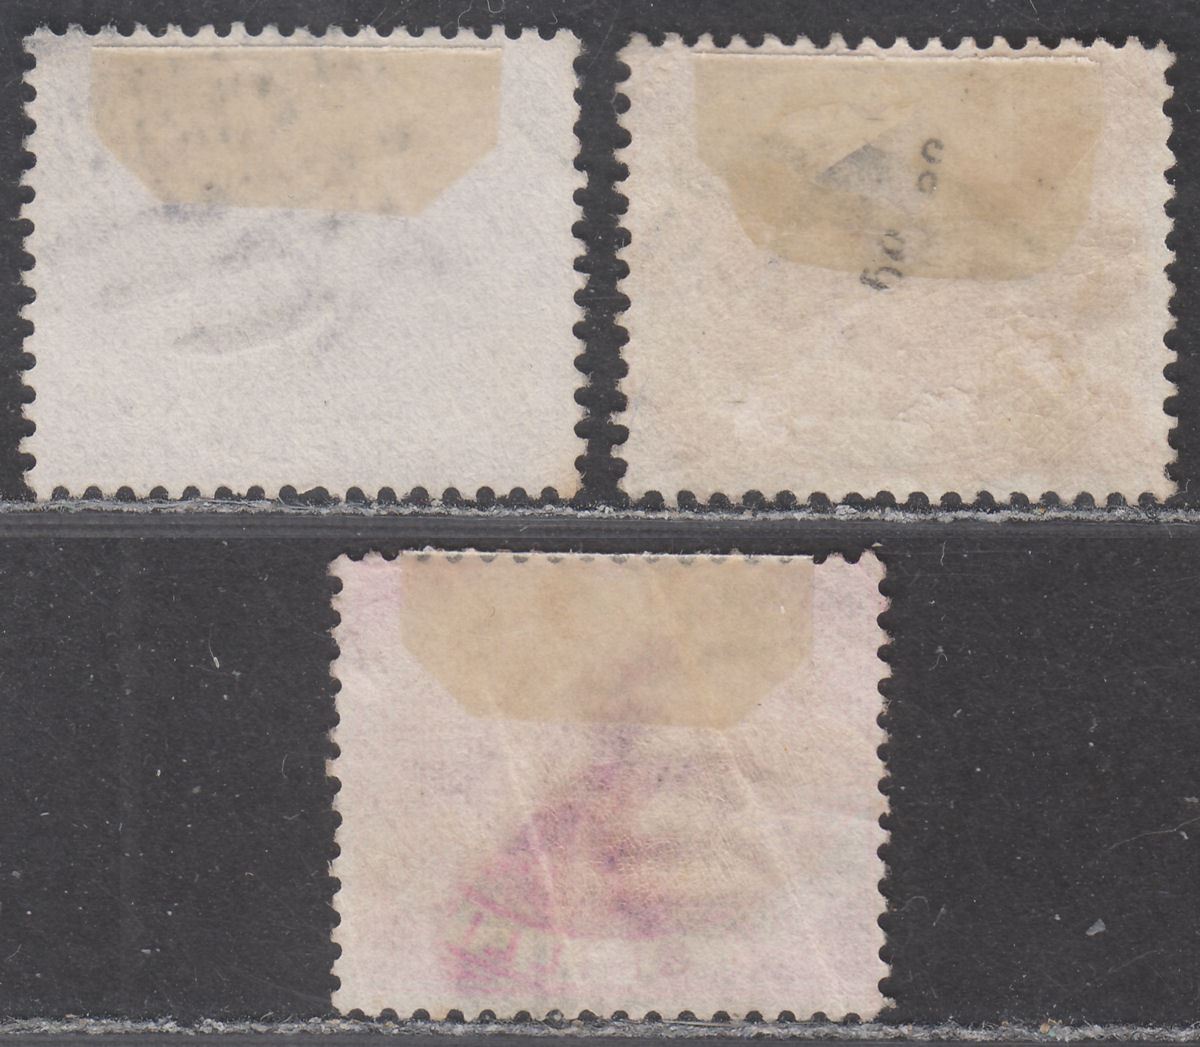 Tasmania 1880 QV Revenue Stamp Duty Platypus 3d, 6d, 1sh Used SG F27-F29